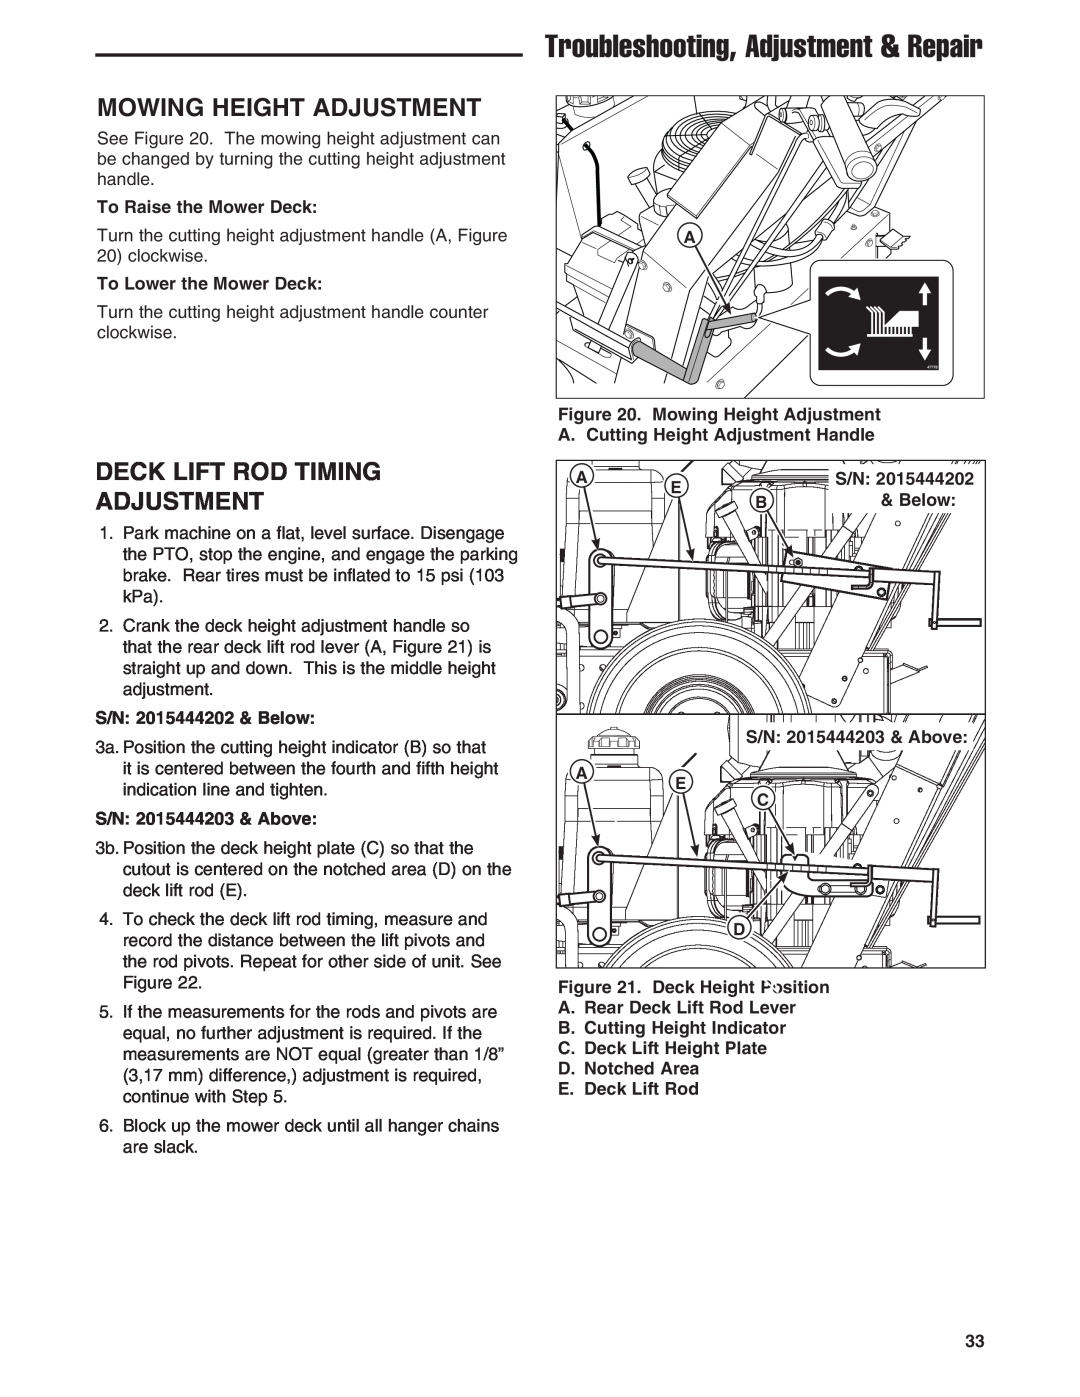 Ferris Industries 5900637 Mowing Height Adjustment, Deck Lift Rod Timing Adjustment, Troubleshooting, Adjustment & Repair 